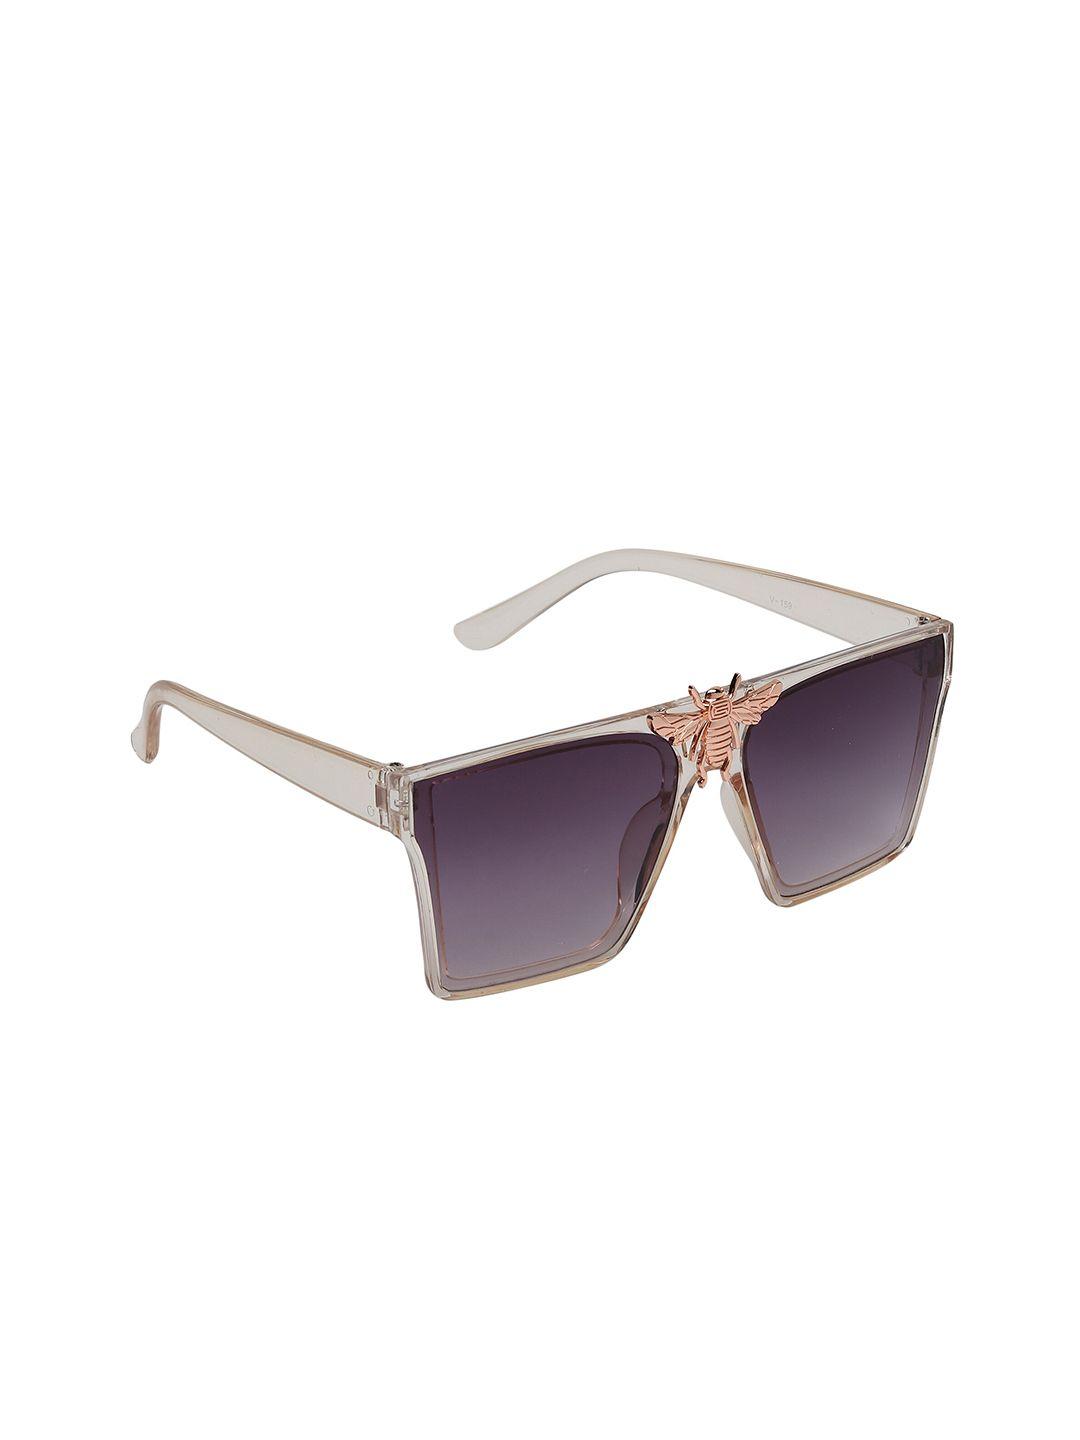 swiss-design-unisex-purple-sunglasses